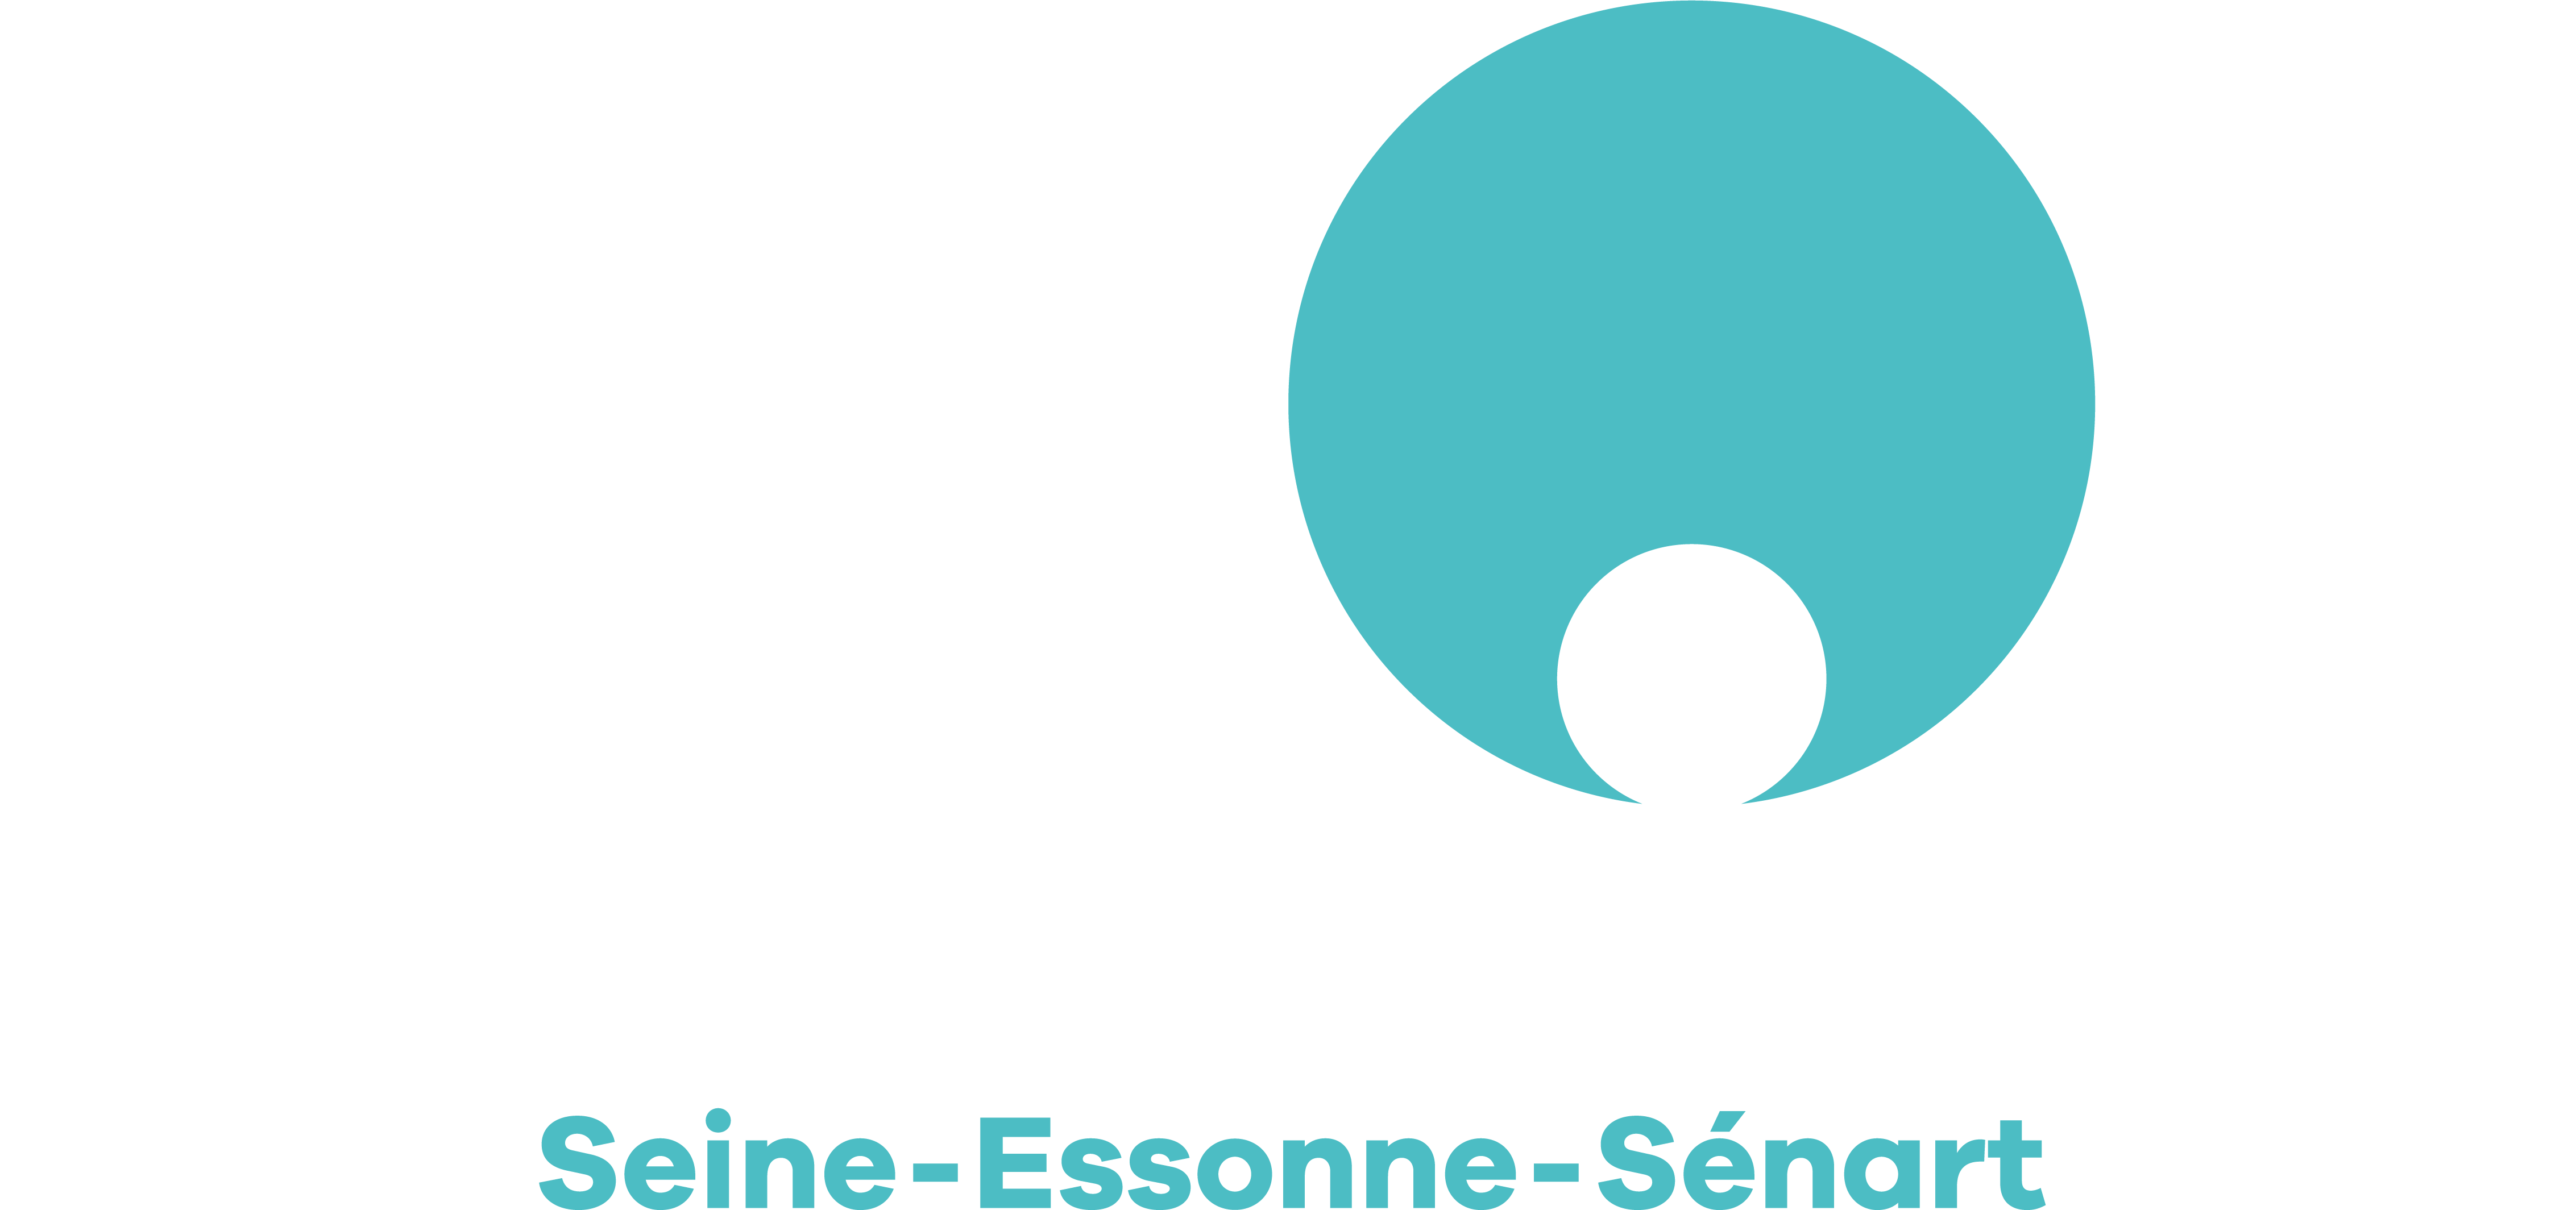 grand paris sud logo